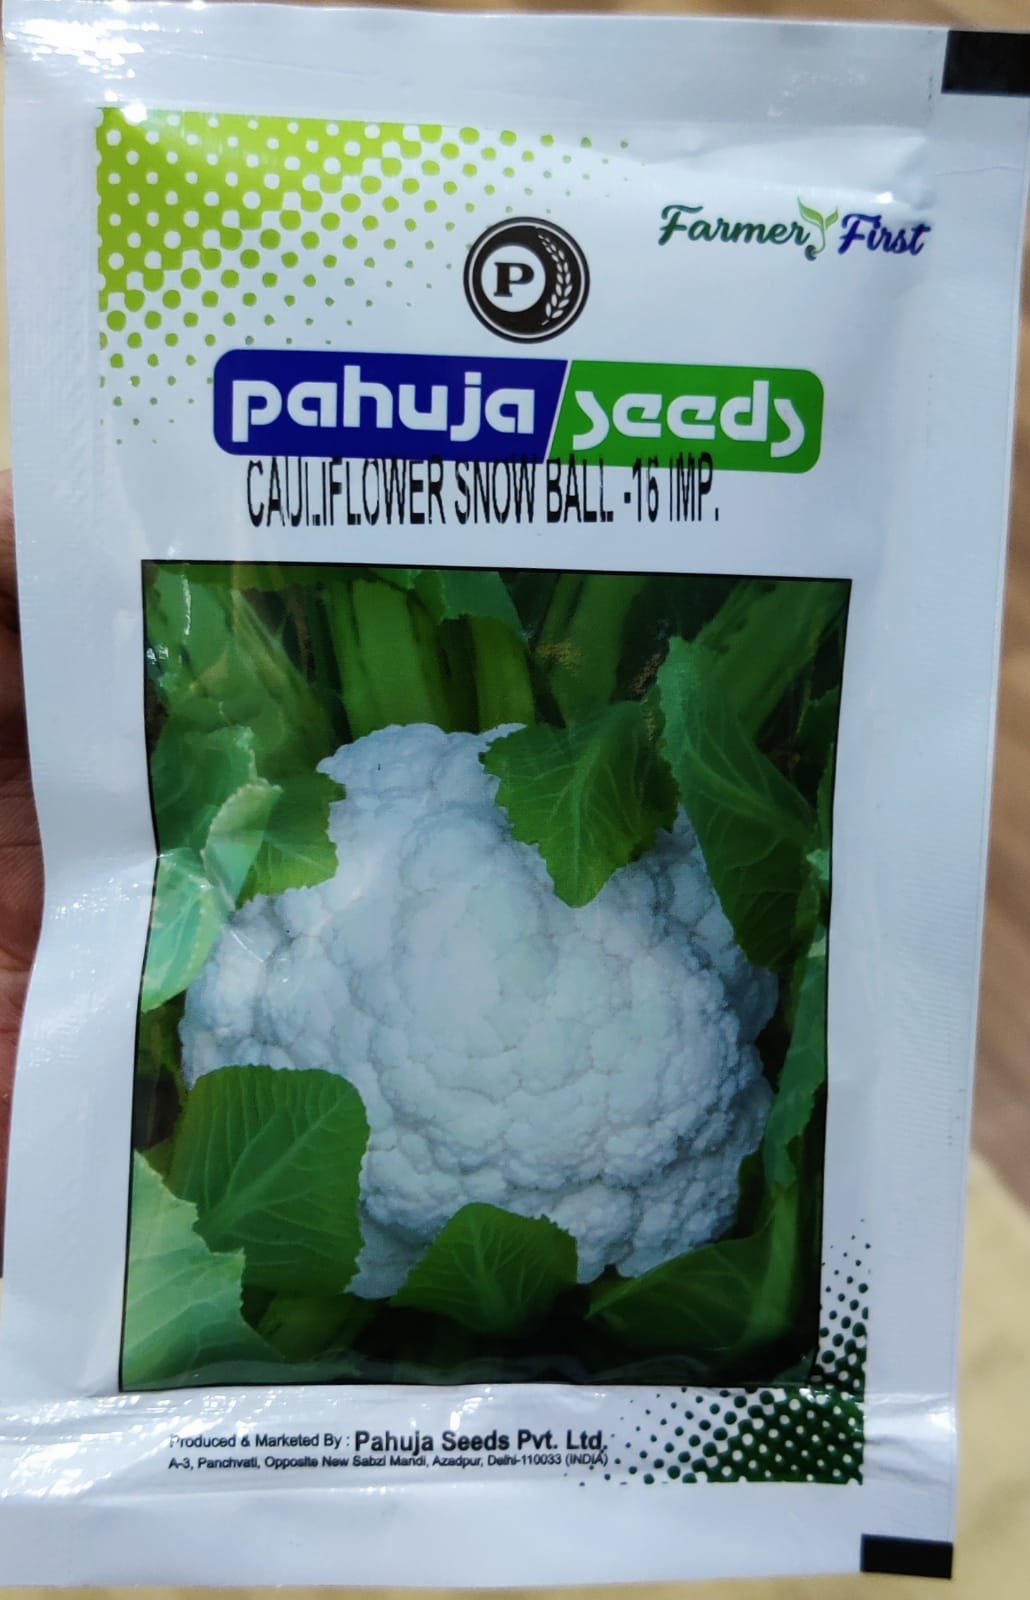 Cauliflower Snowball 16 (Pahuja Seeds)